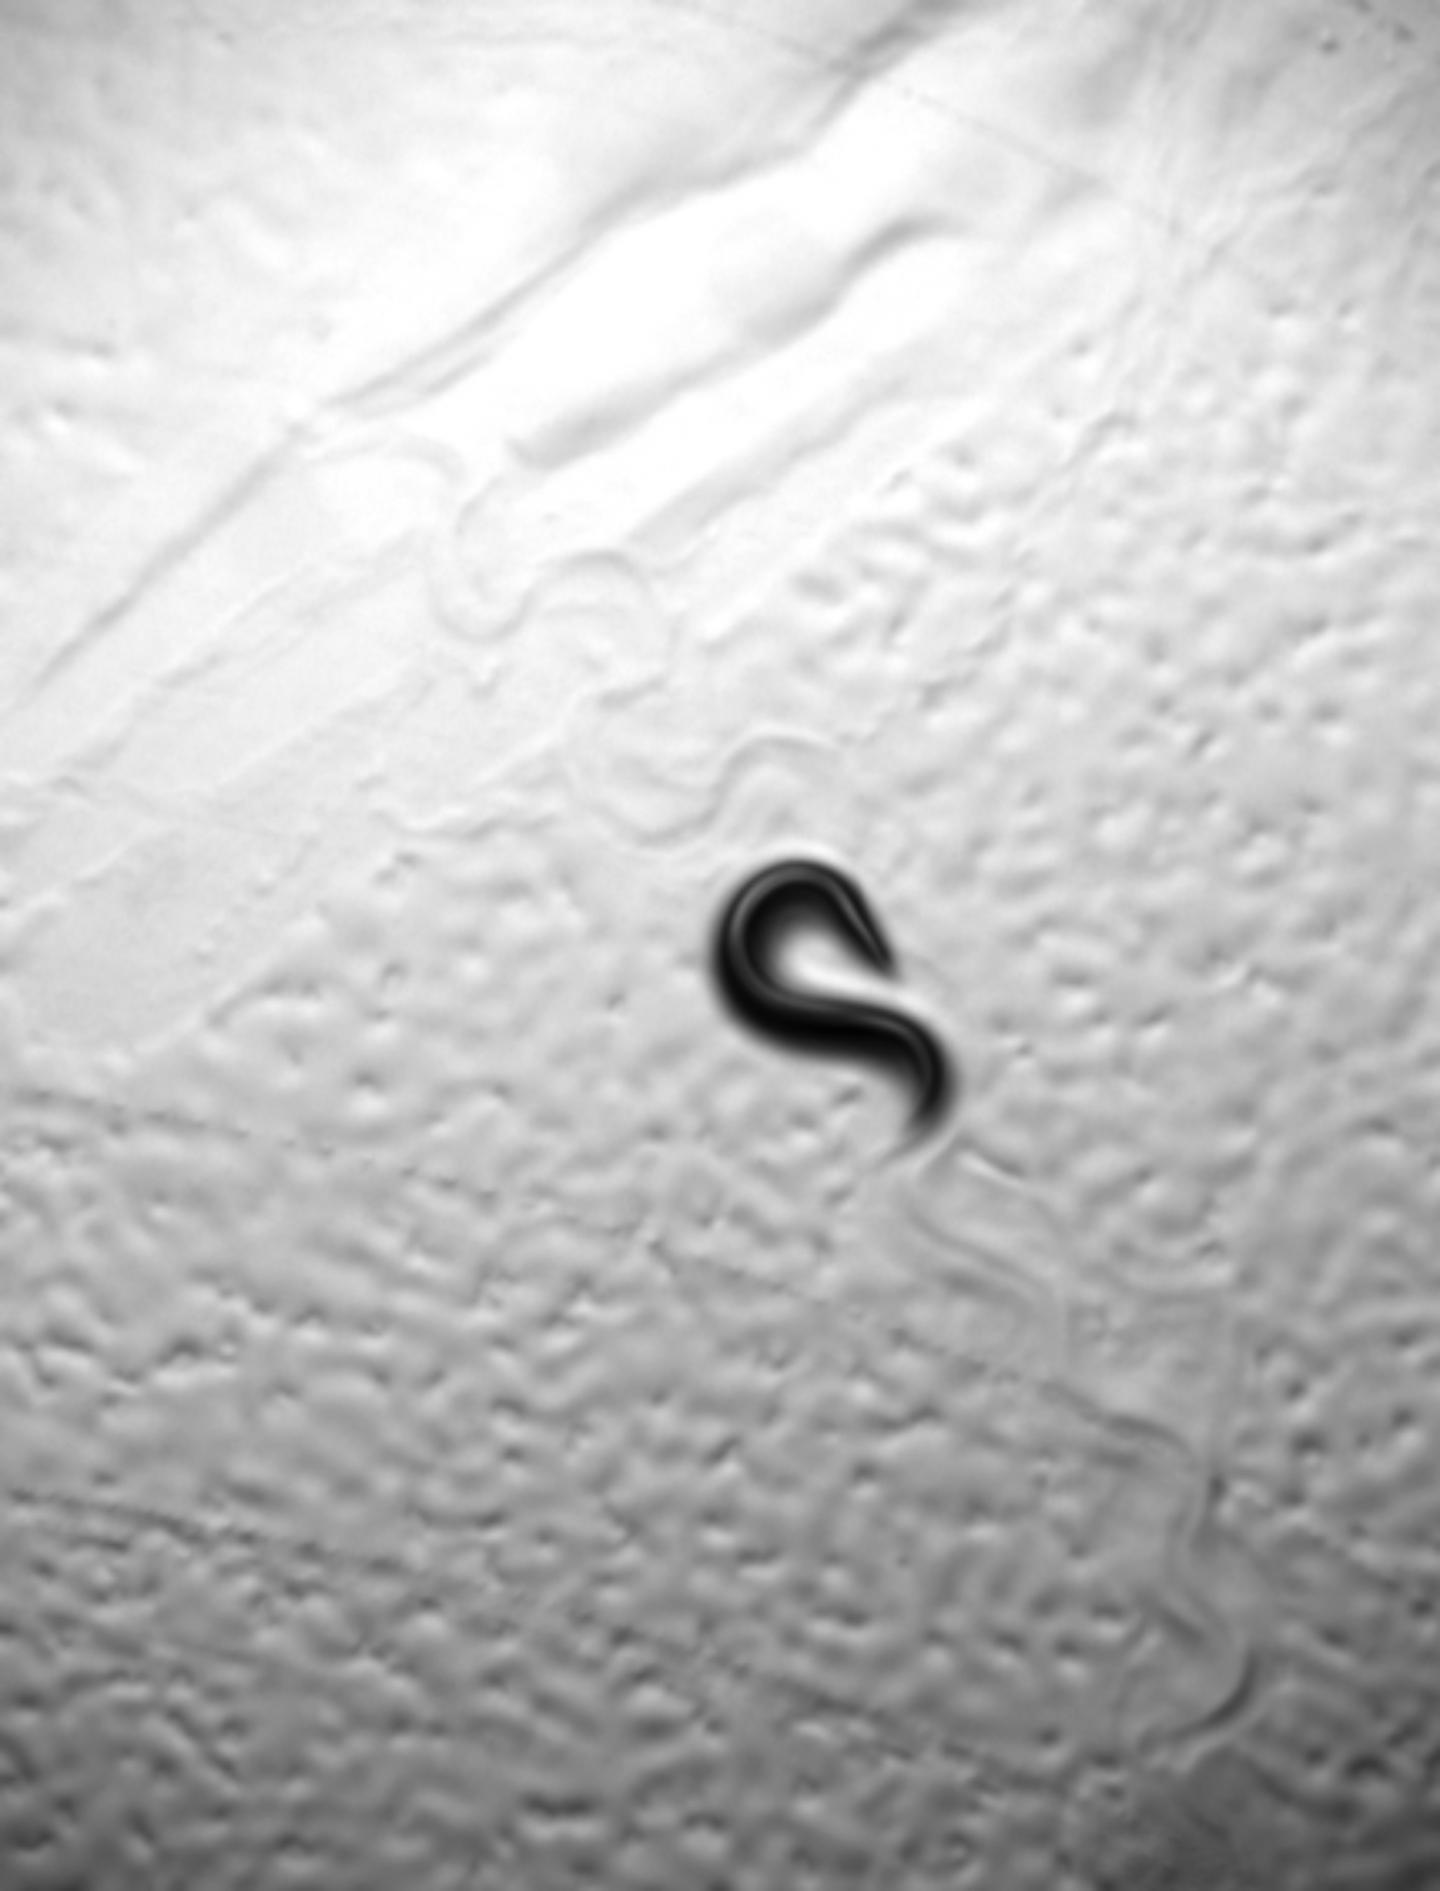 Omega Turn of a Tiny Worm